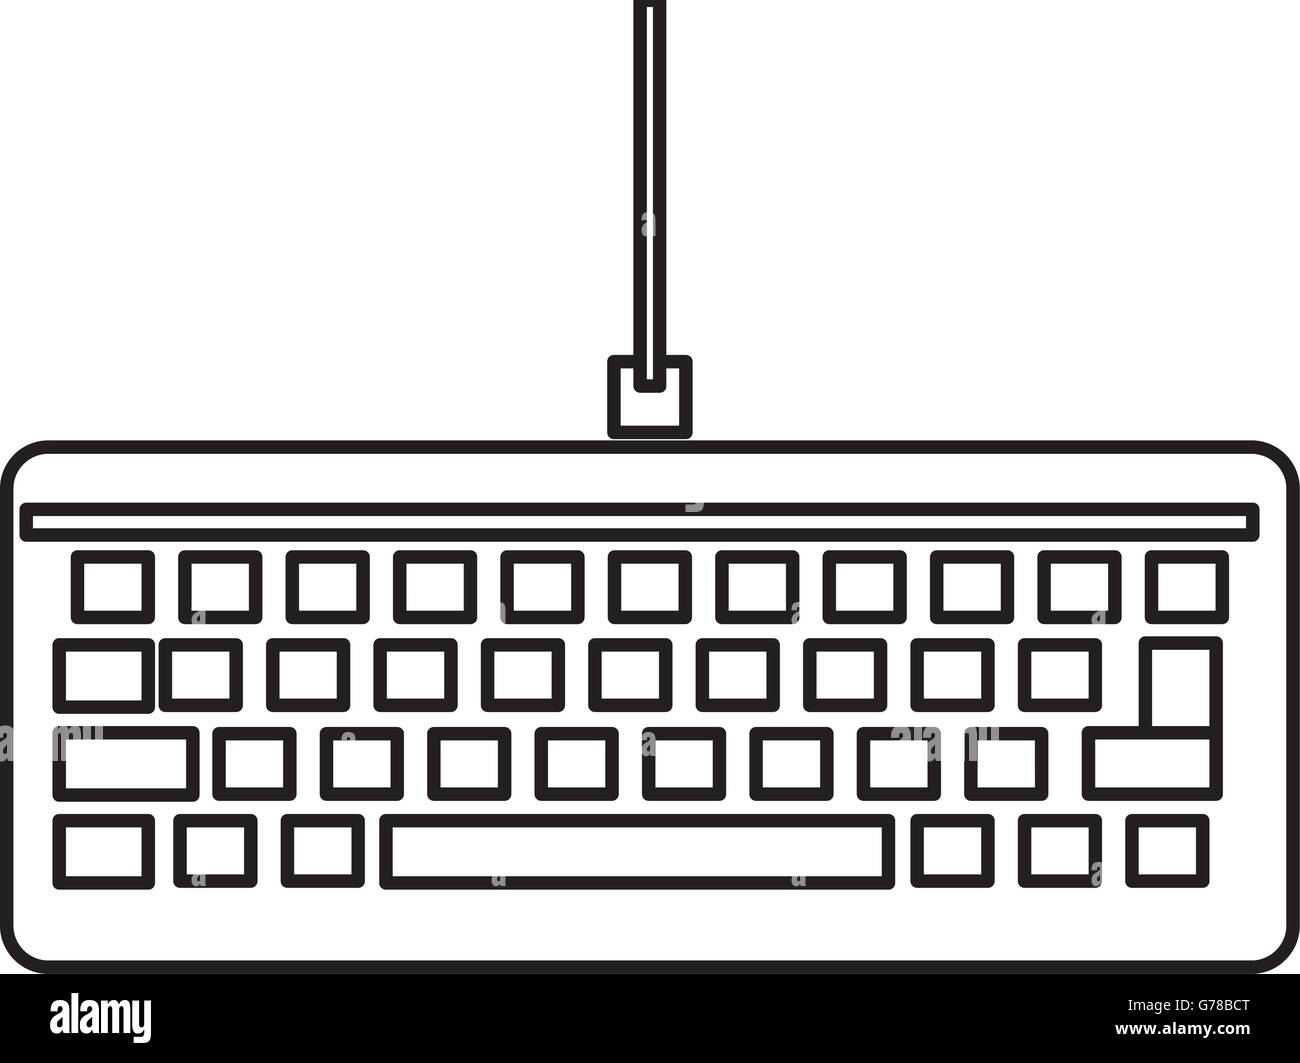 simple keyboard icon Stock Vector Image & Art - Alamy